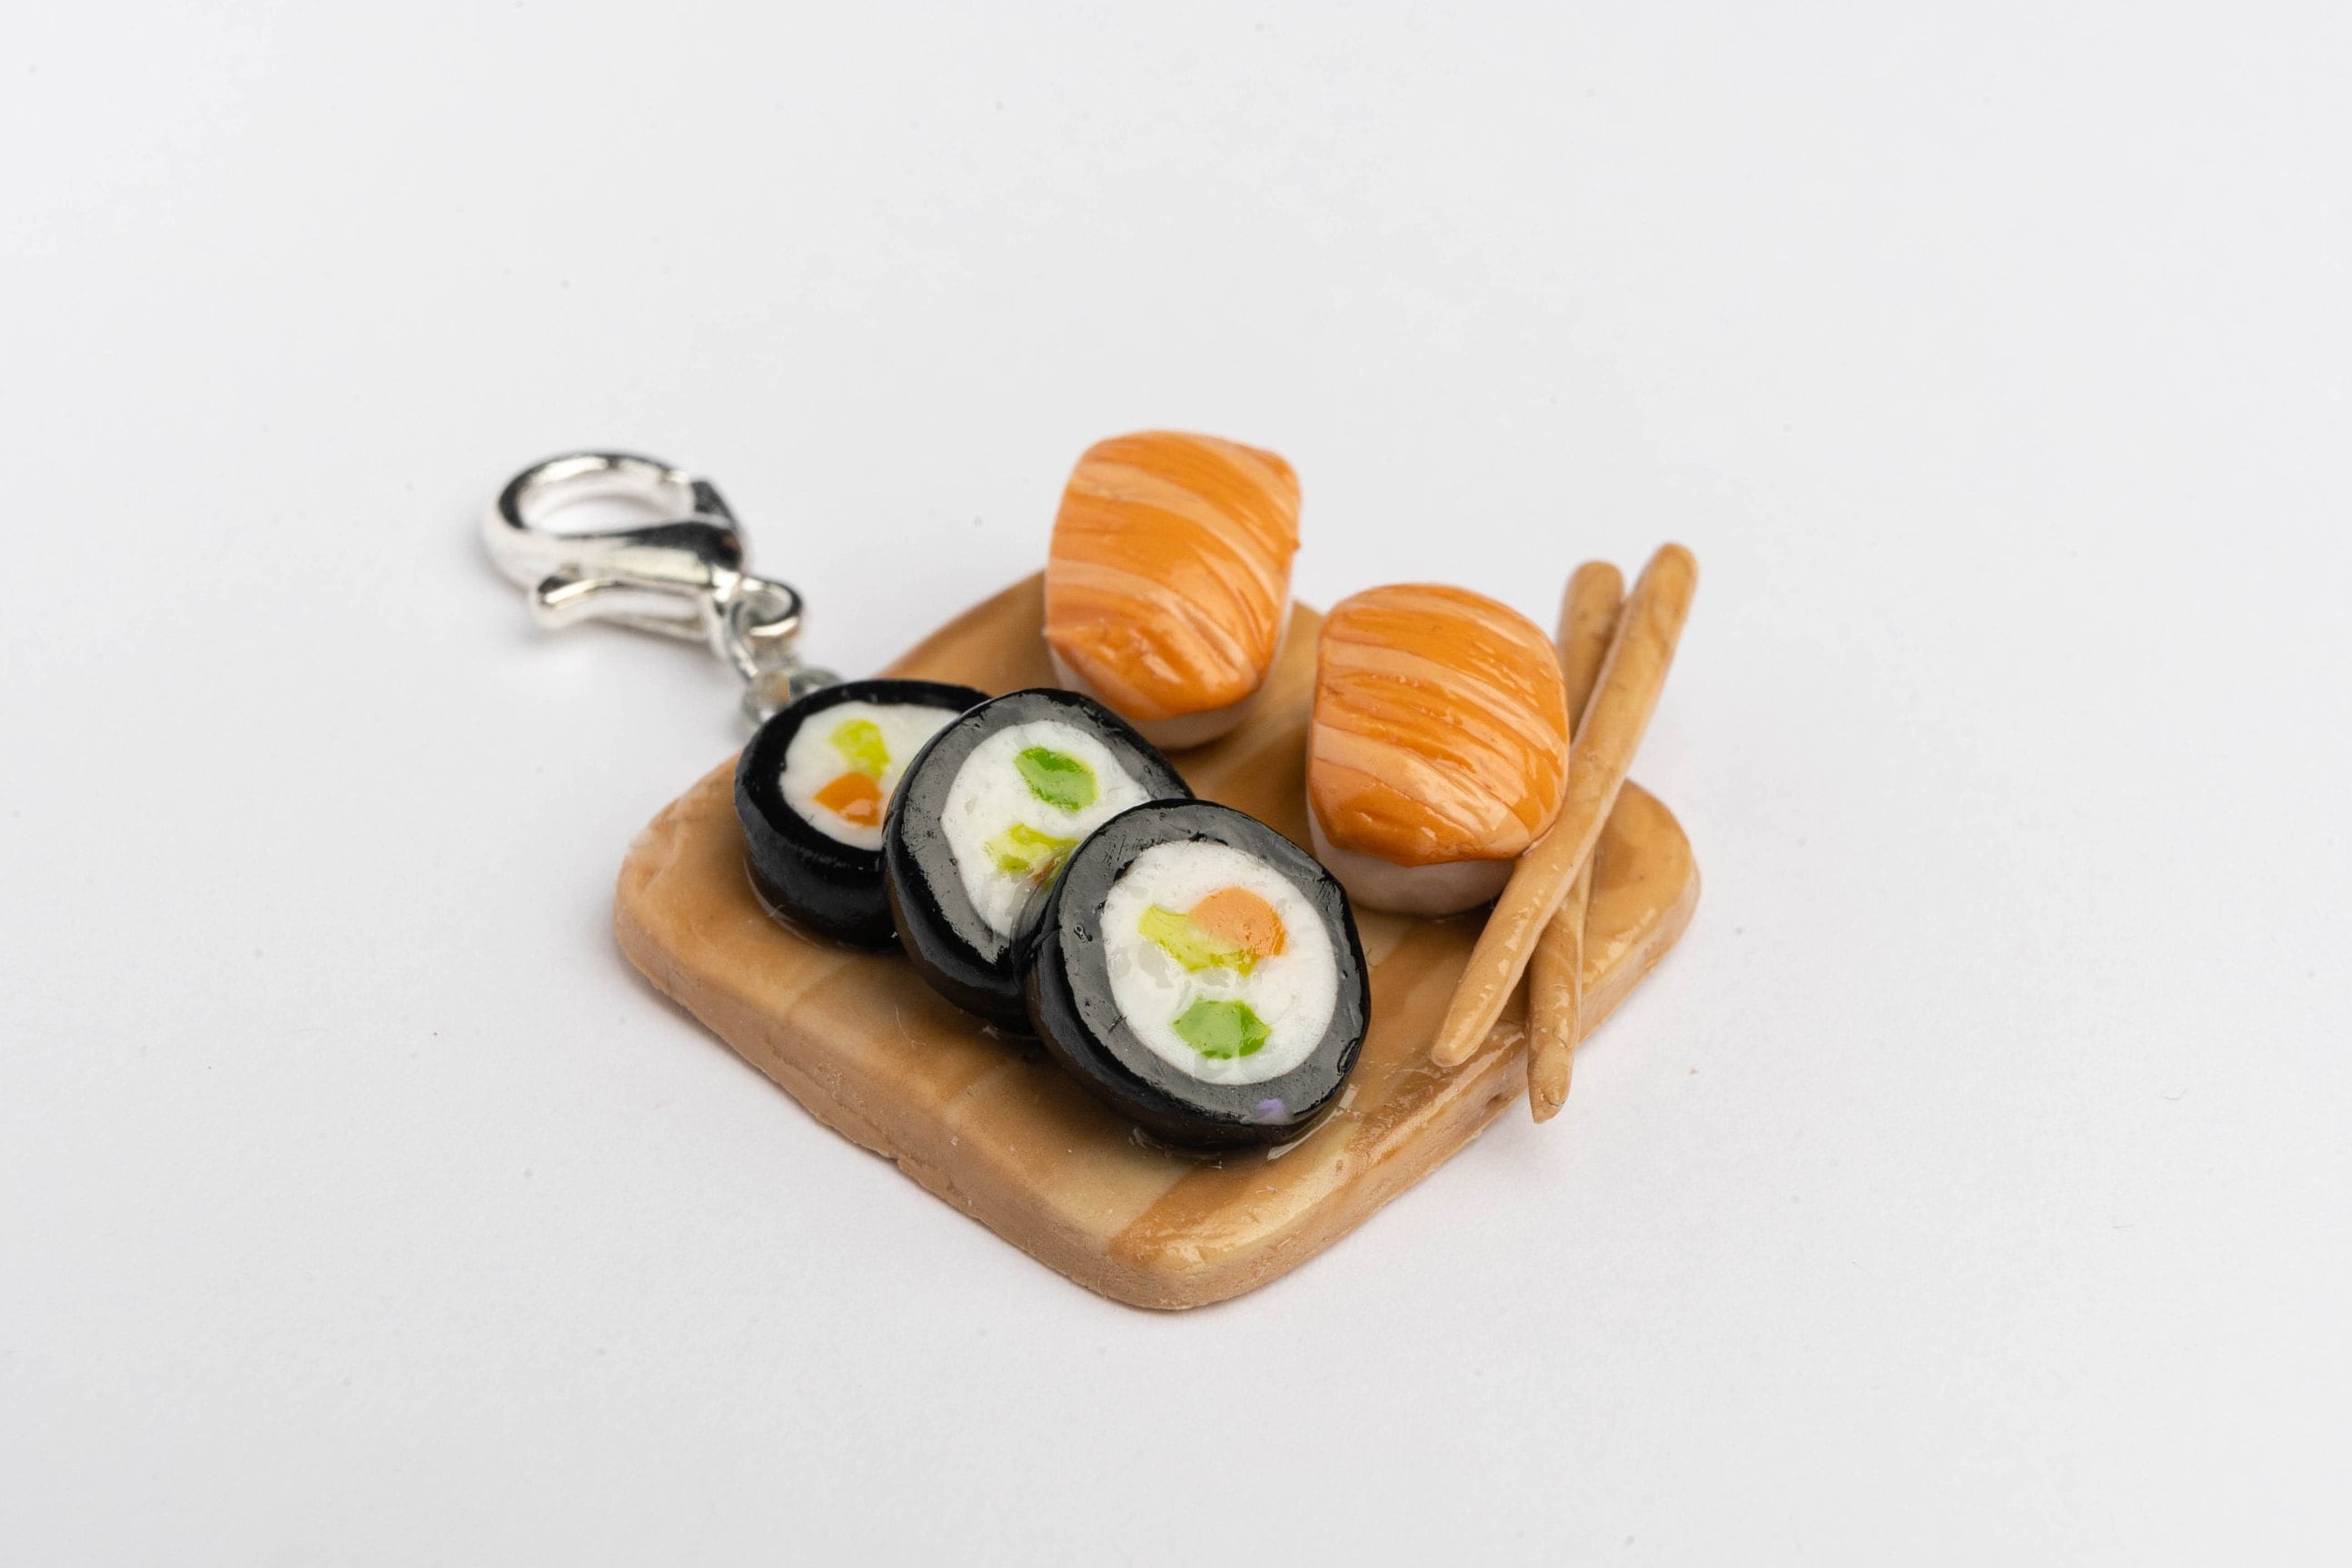 Kit Sushi Maki Complet, Cuisine Sushi Maker 14 Pieces,Compatible